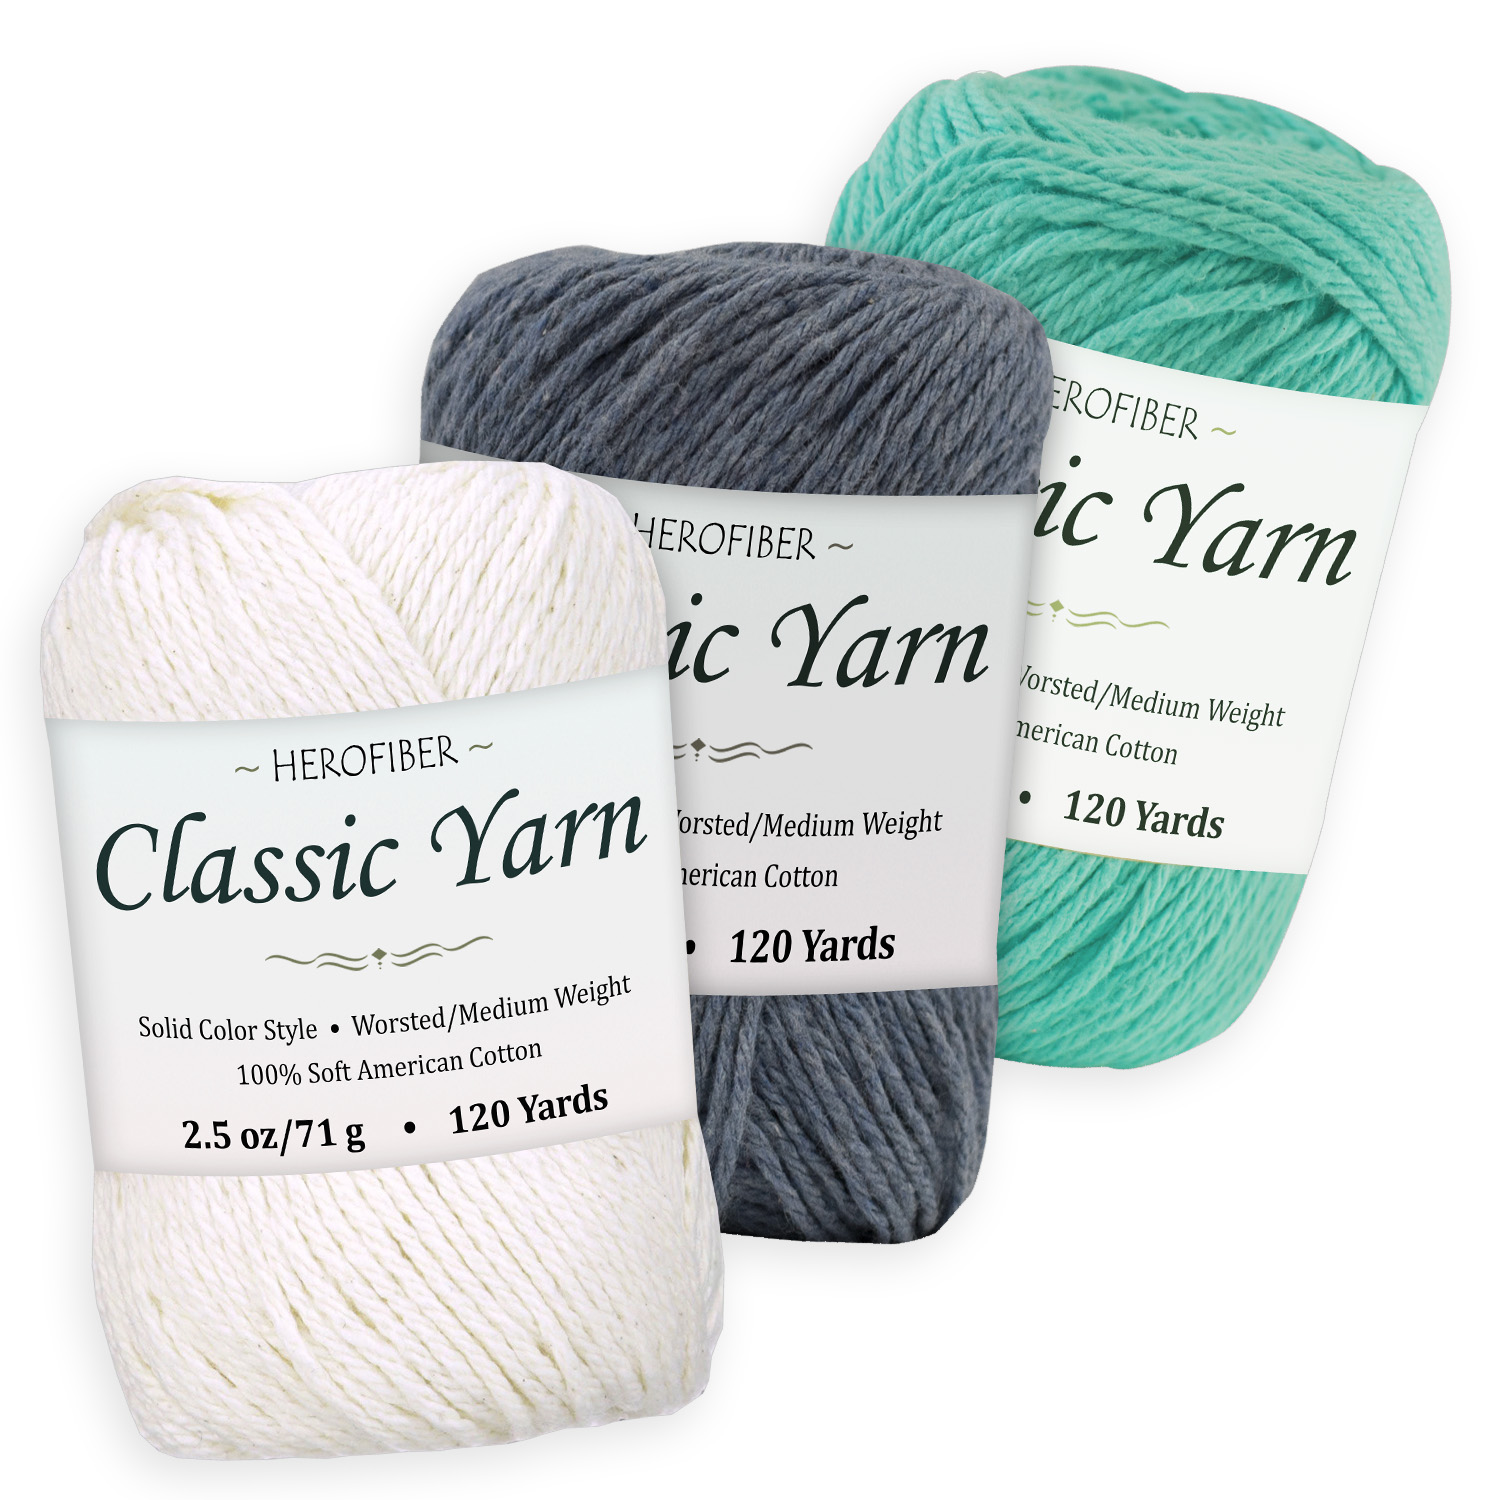 3 Solid Colors 2.5 oz Each Dark Turquoise Light Denim | Coconut White WorstedMedium Weight Assortment for Cotton Yarn